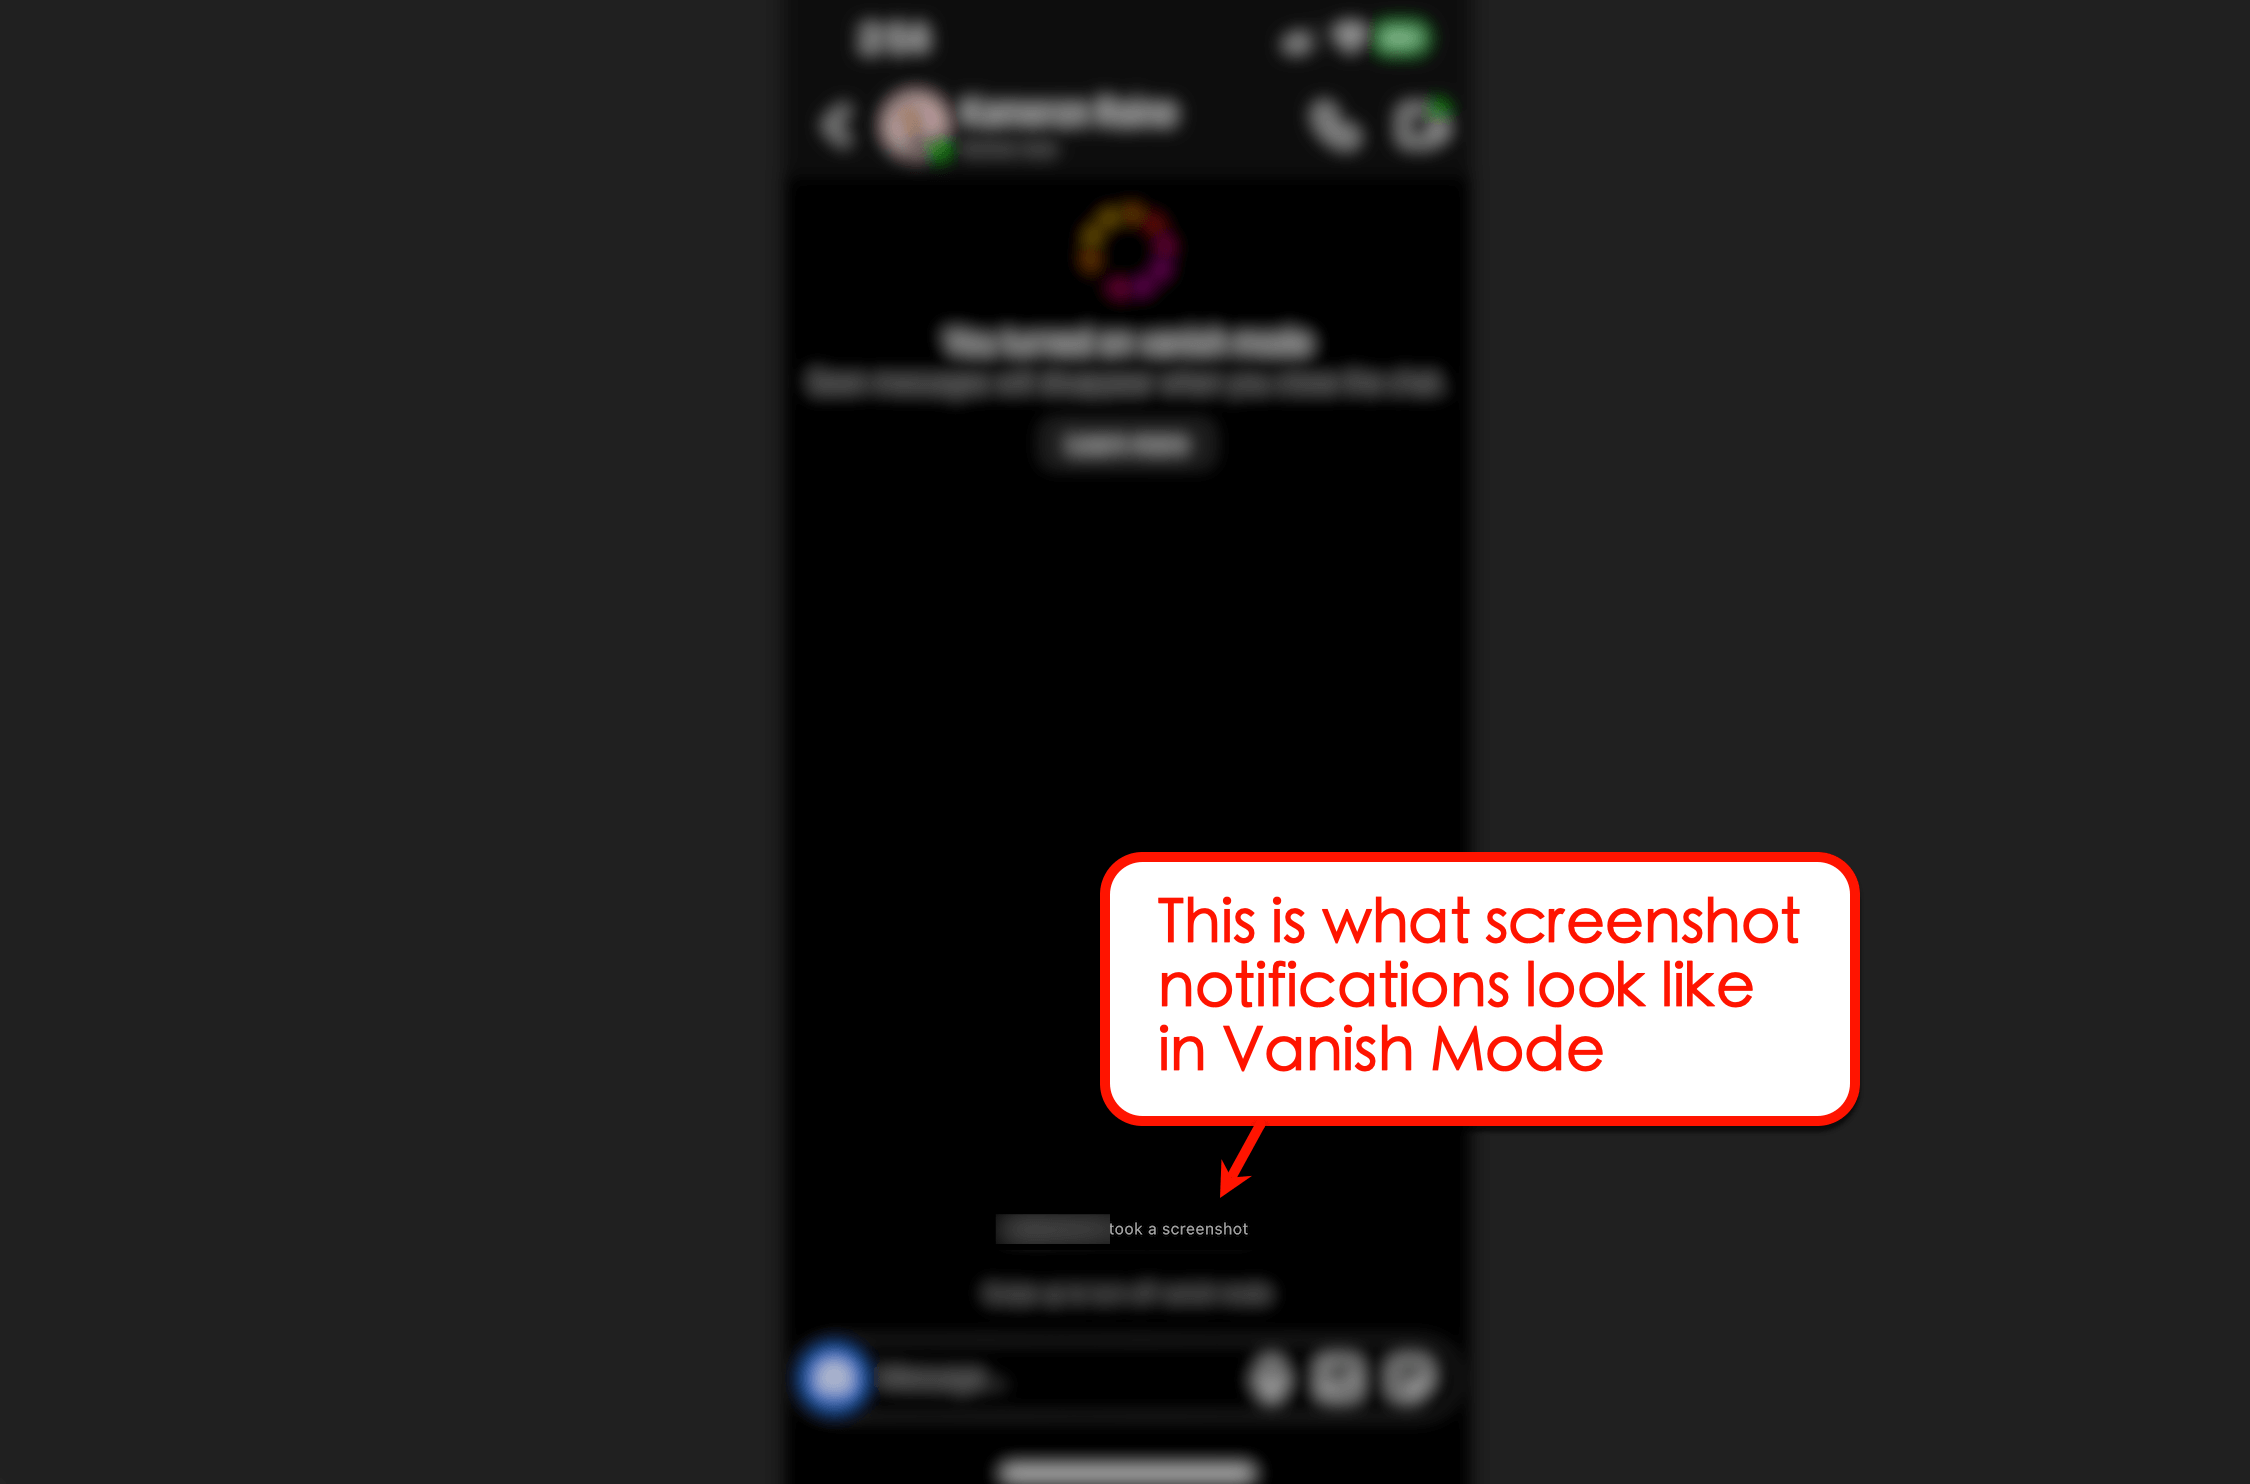 Vanish mode view of notifications